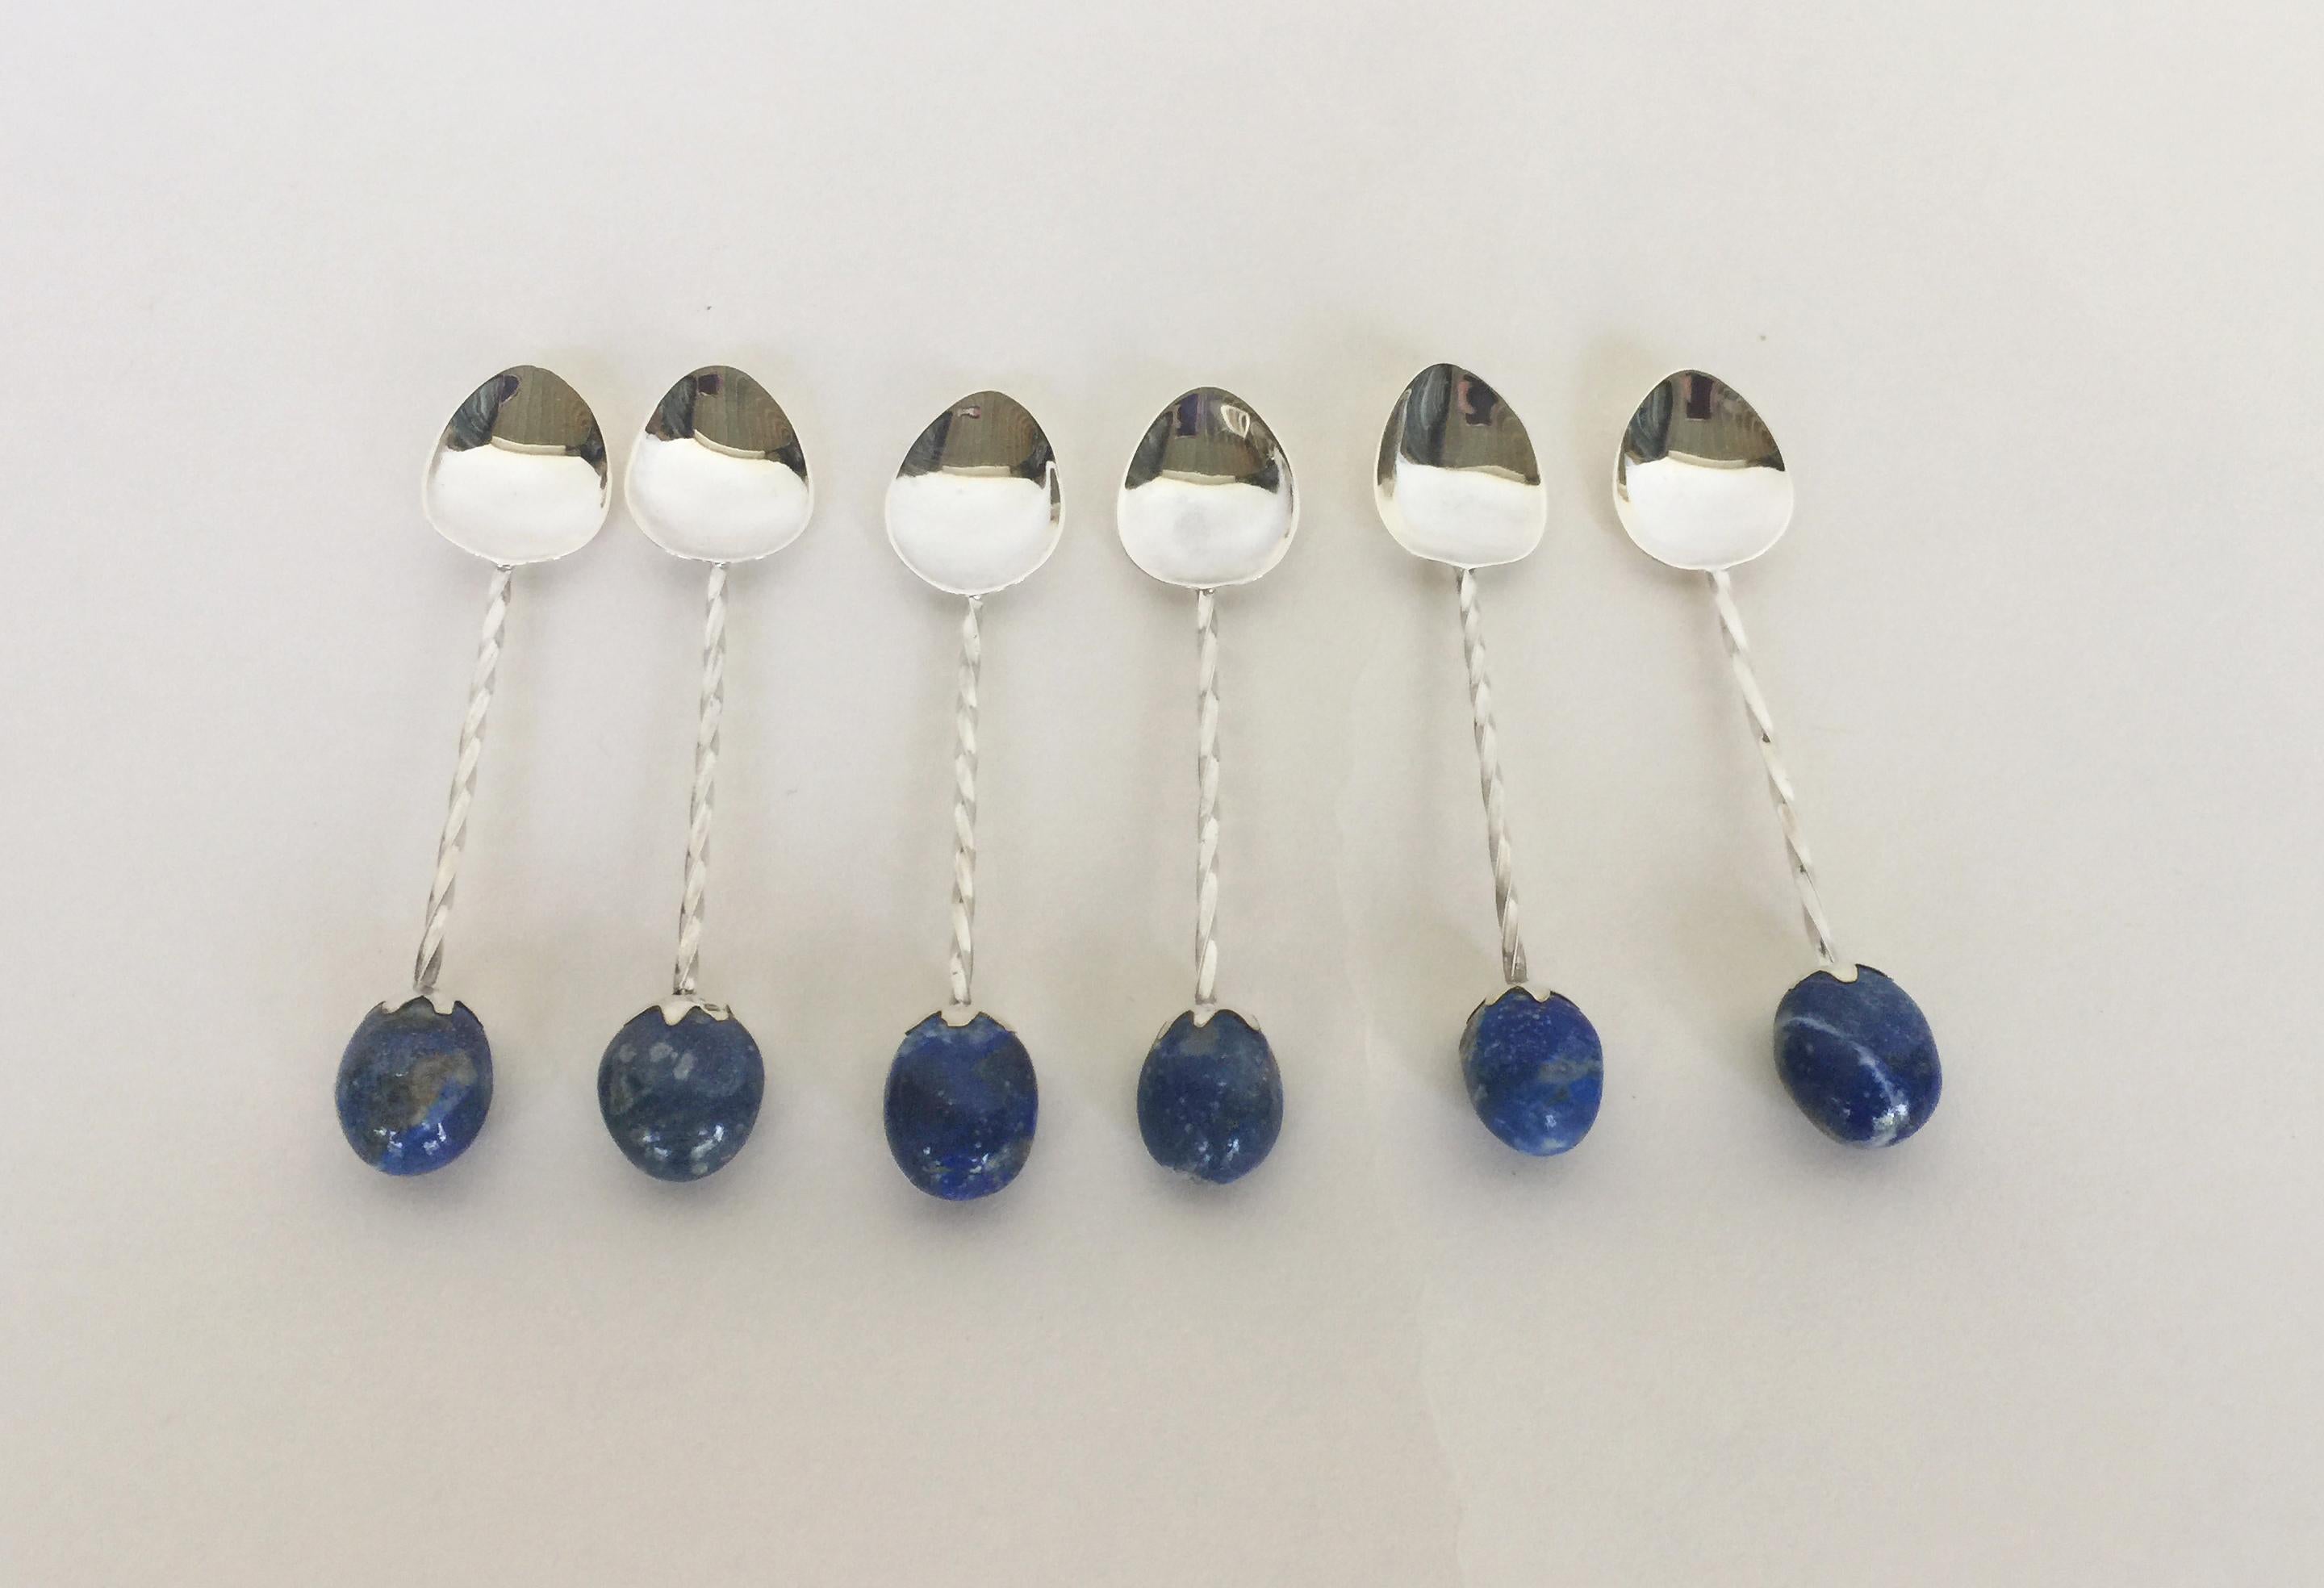 Artist 6 Rhodium Plated Sterling Silver Tea Spoon Set with Lapis Lazuli Stones, Marina J